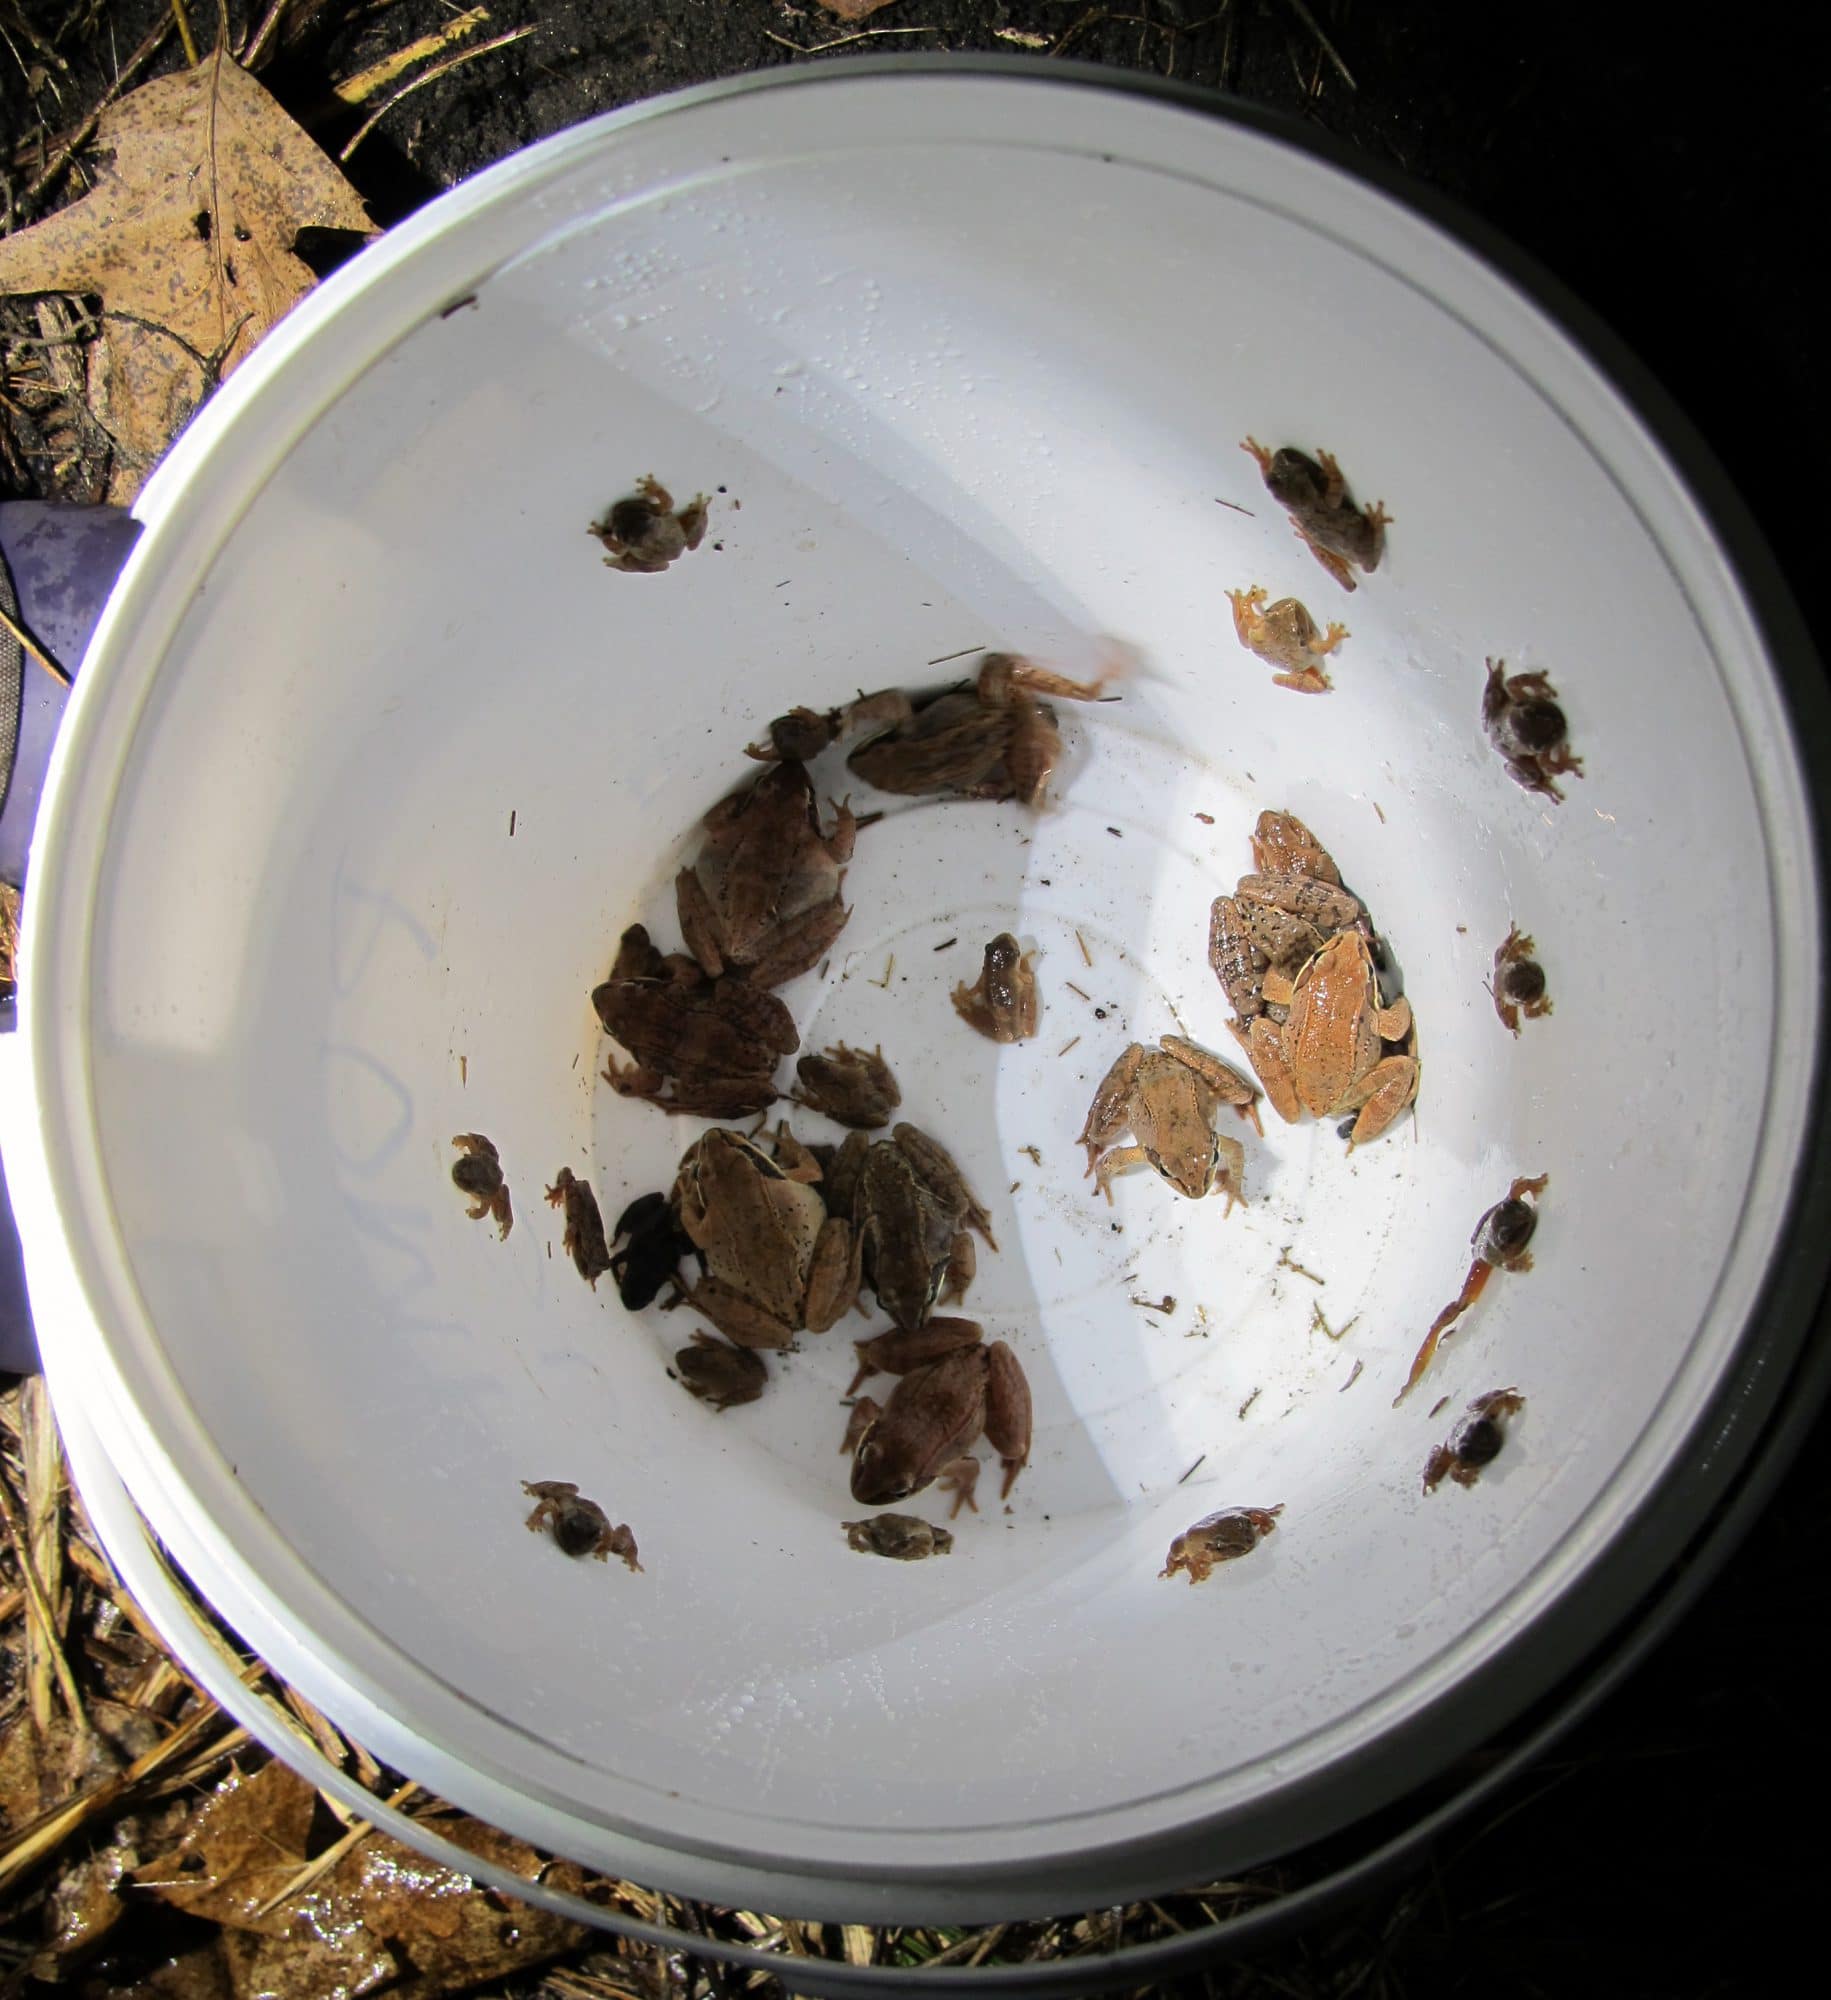 A bucket of frogs. (photo © Brett Amy Thelen)